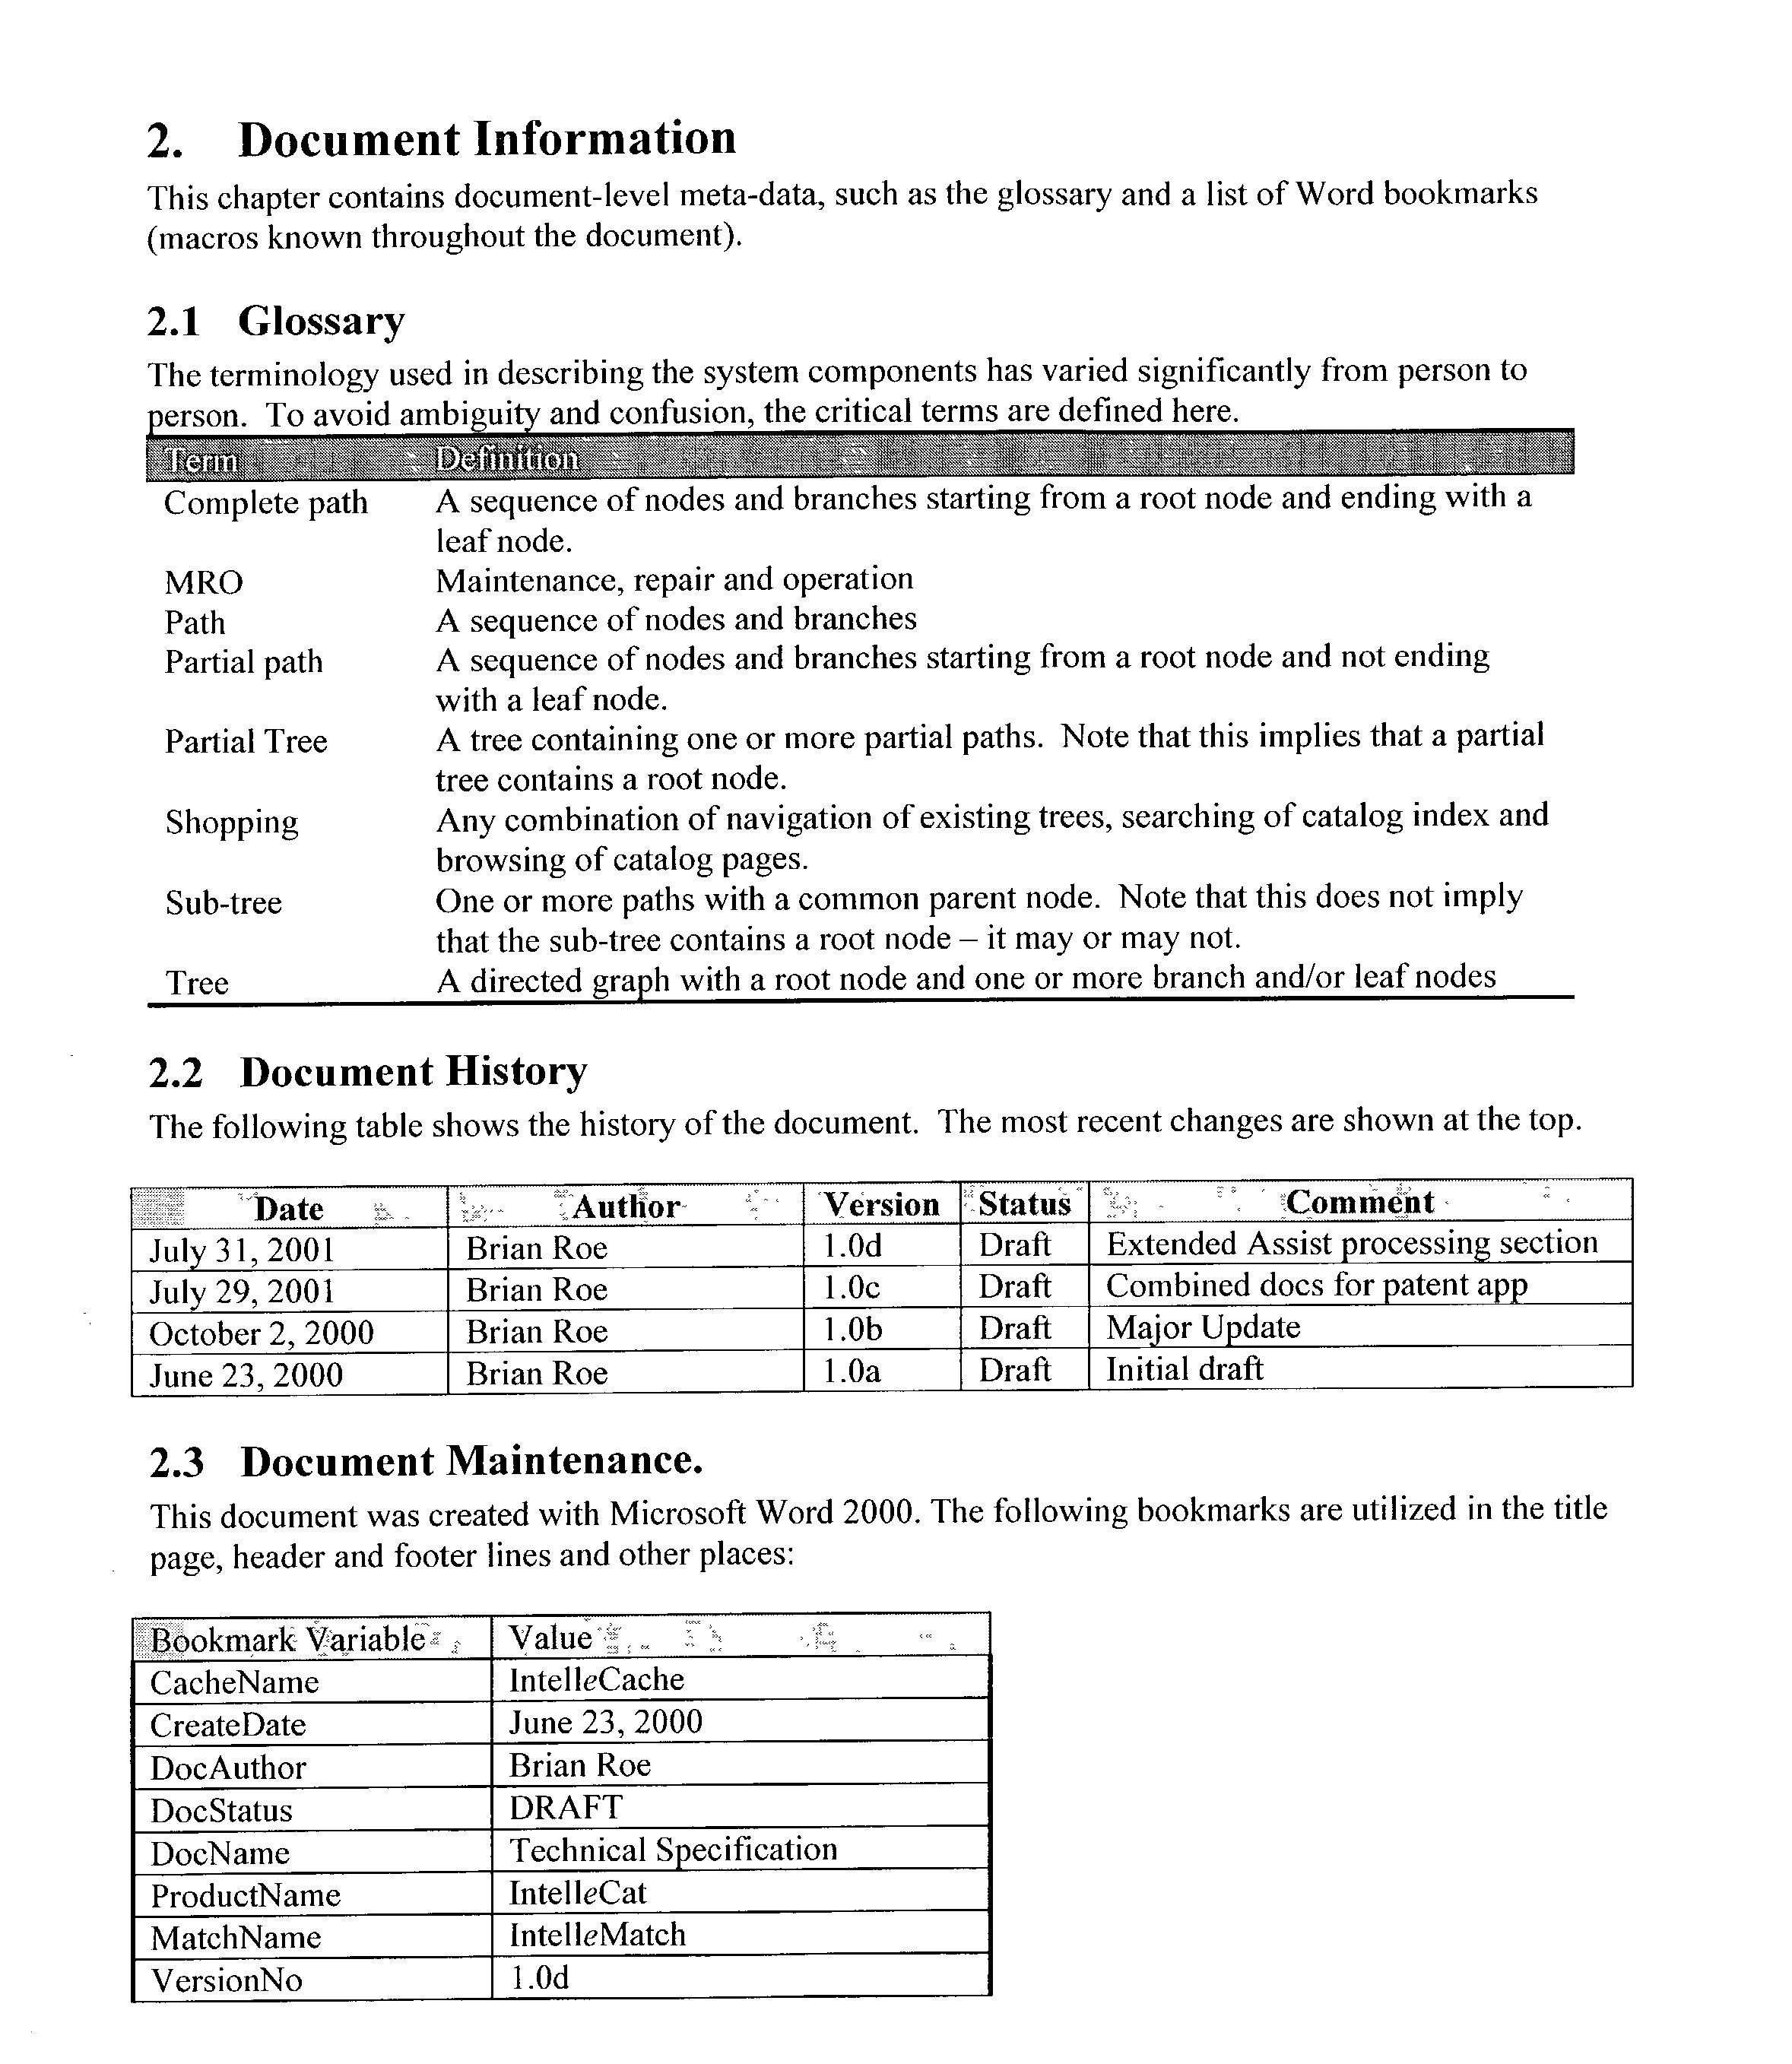 Federal Resume Template Usajobs Resume Template 50 New Free Federal Resume Templates All About Resume Of Usajobs Resume Template federal resume template|wikiresume.com